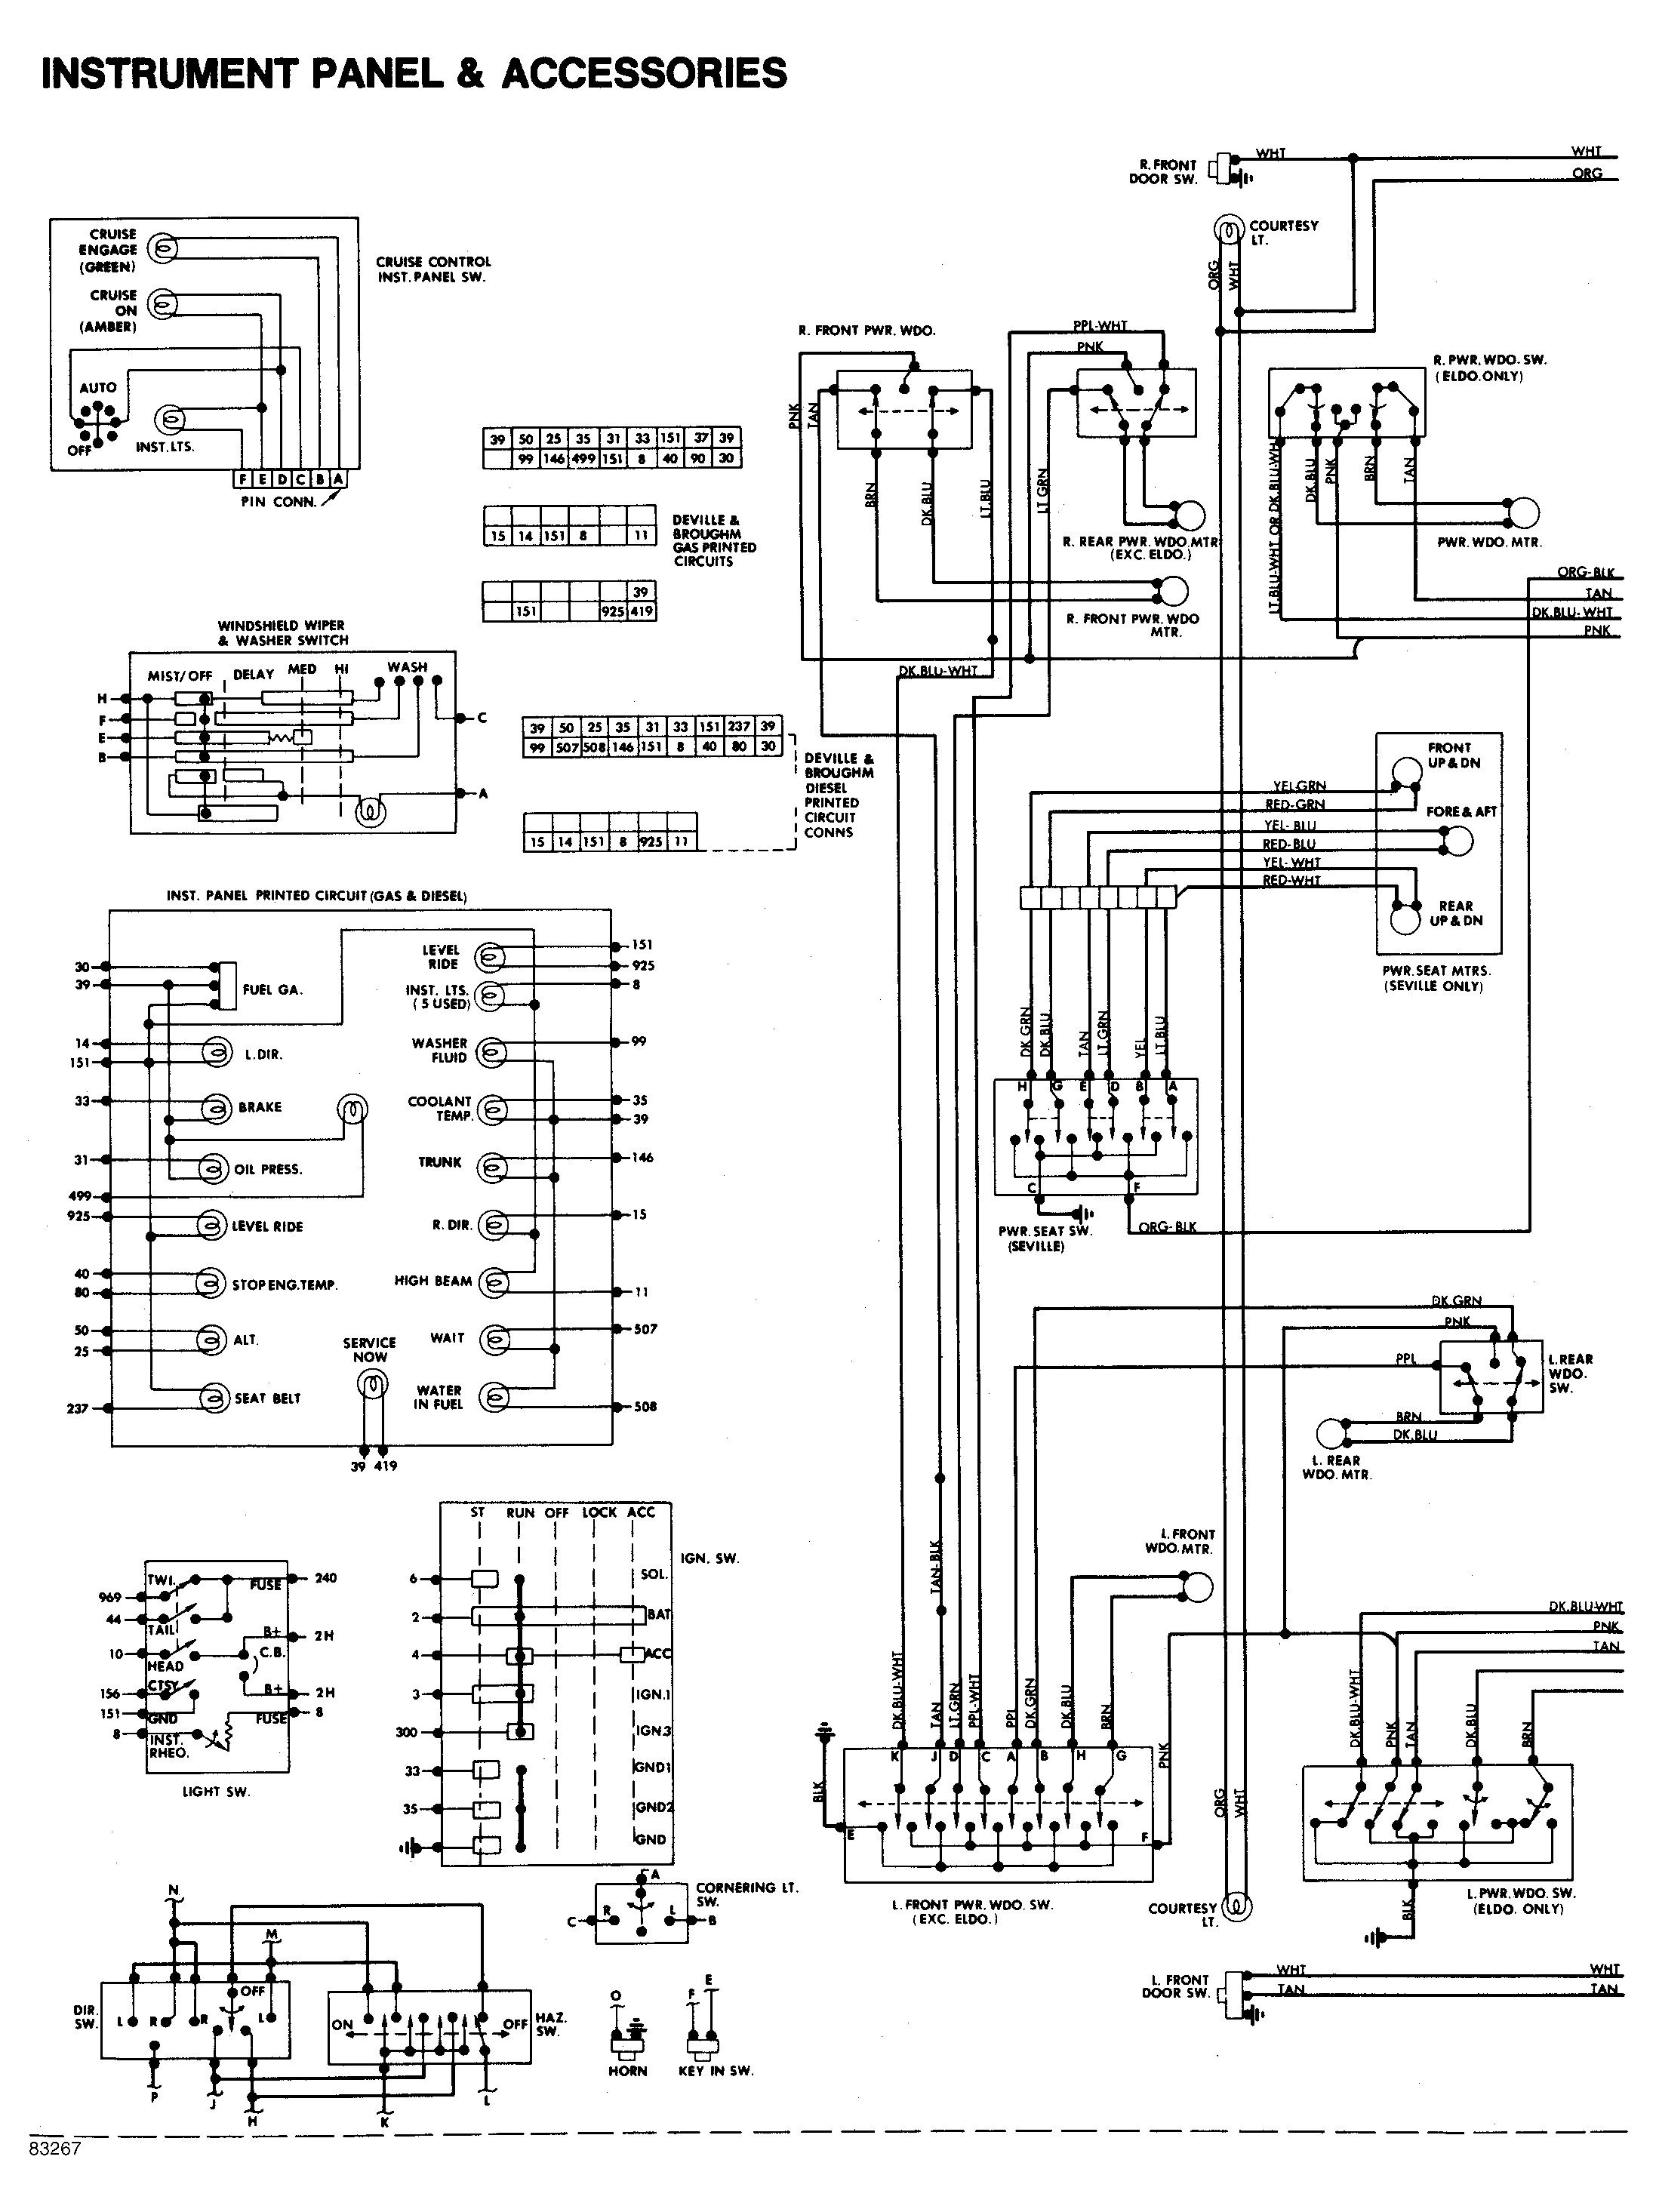 1995 toyota Tercel Engine Diagram toyota Camry Radio Wiring Diagram Of 1995 toyota Tercel Engine Diagram